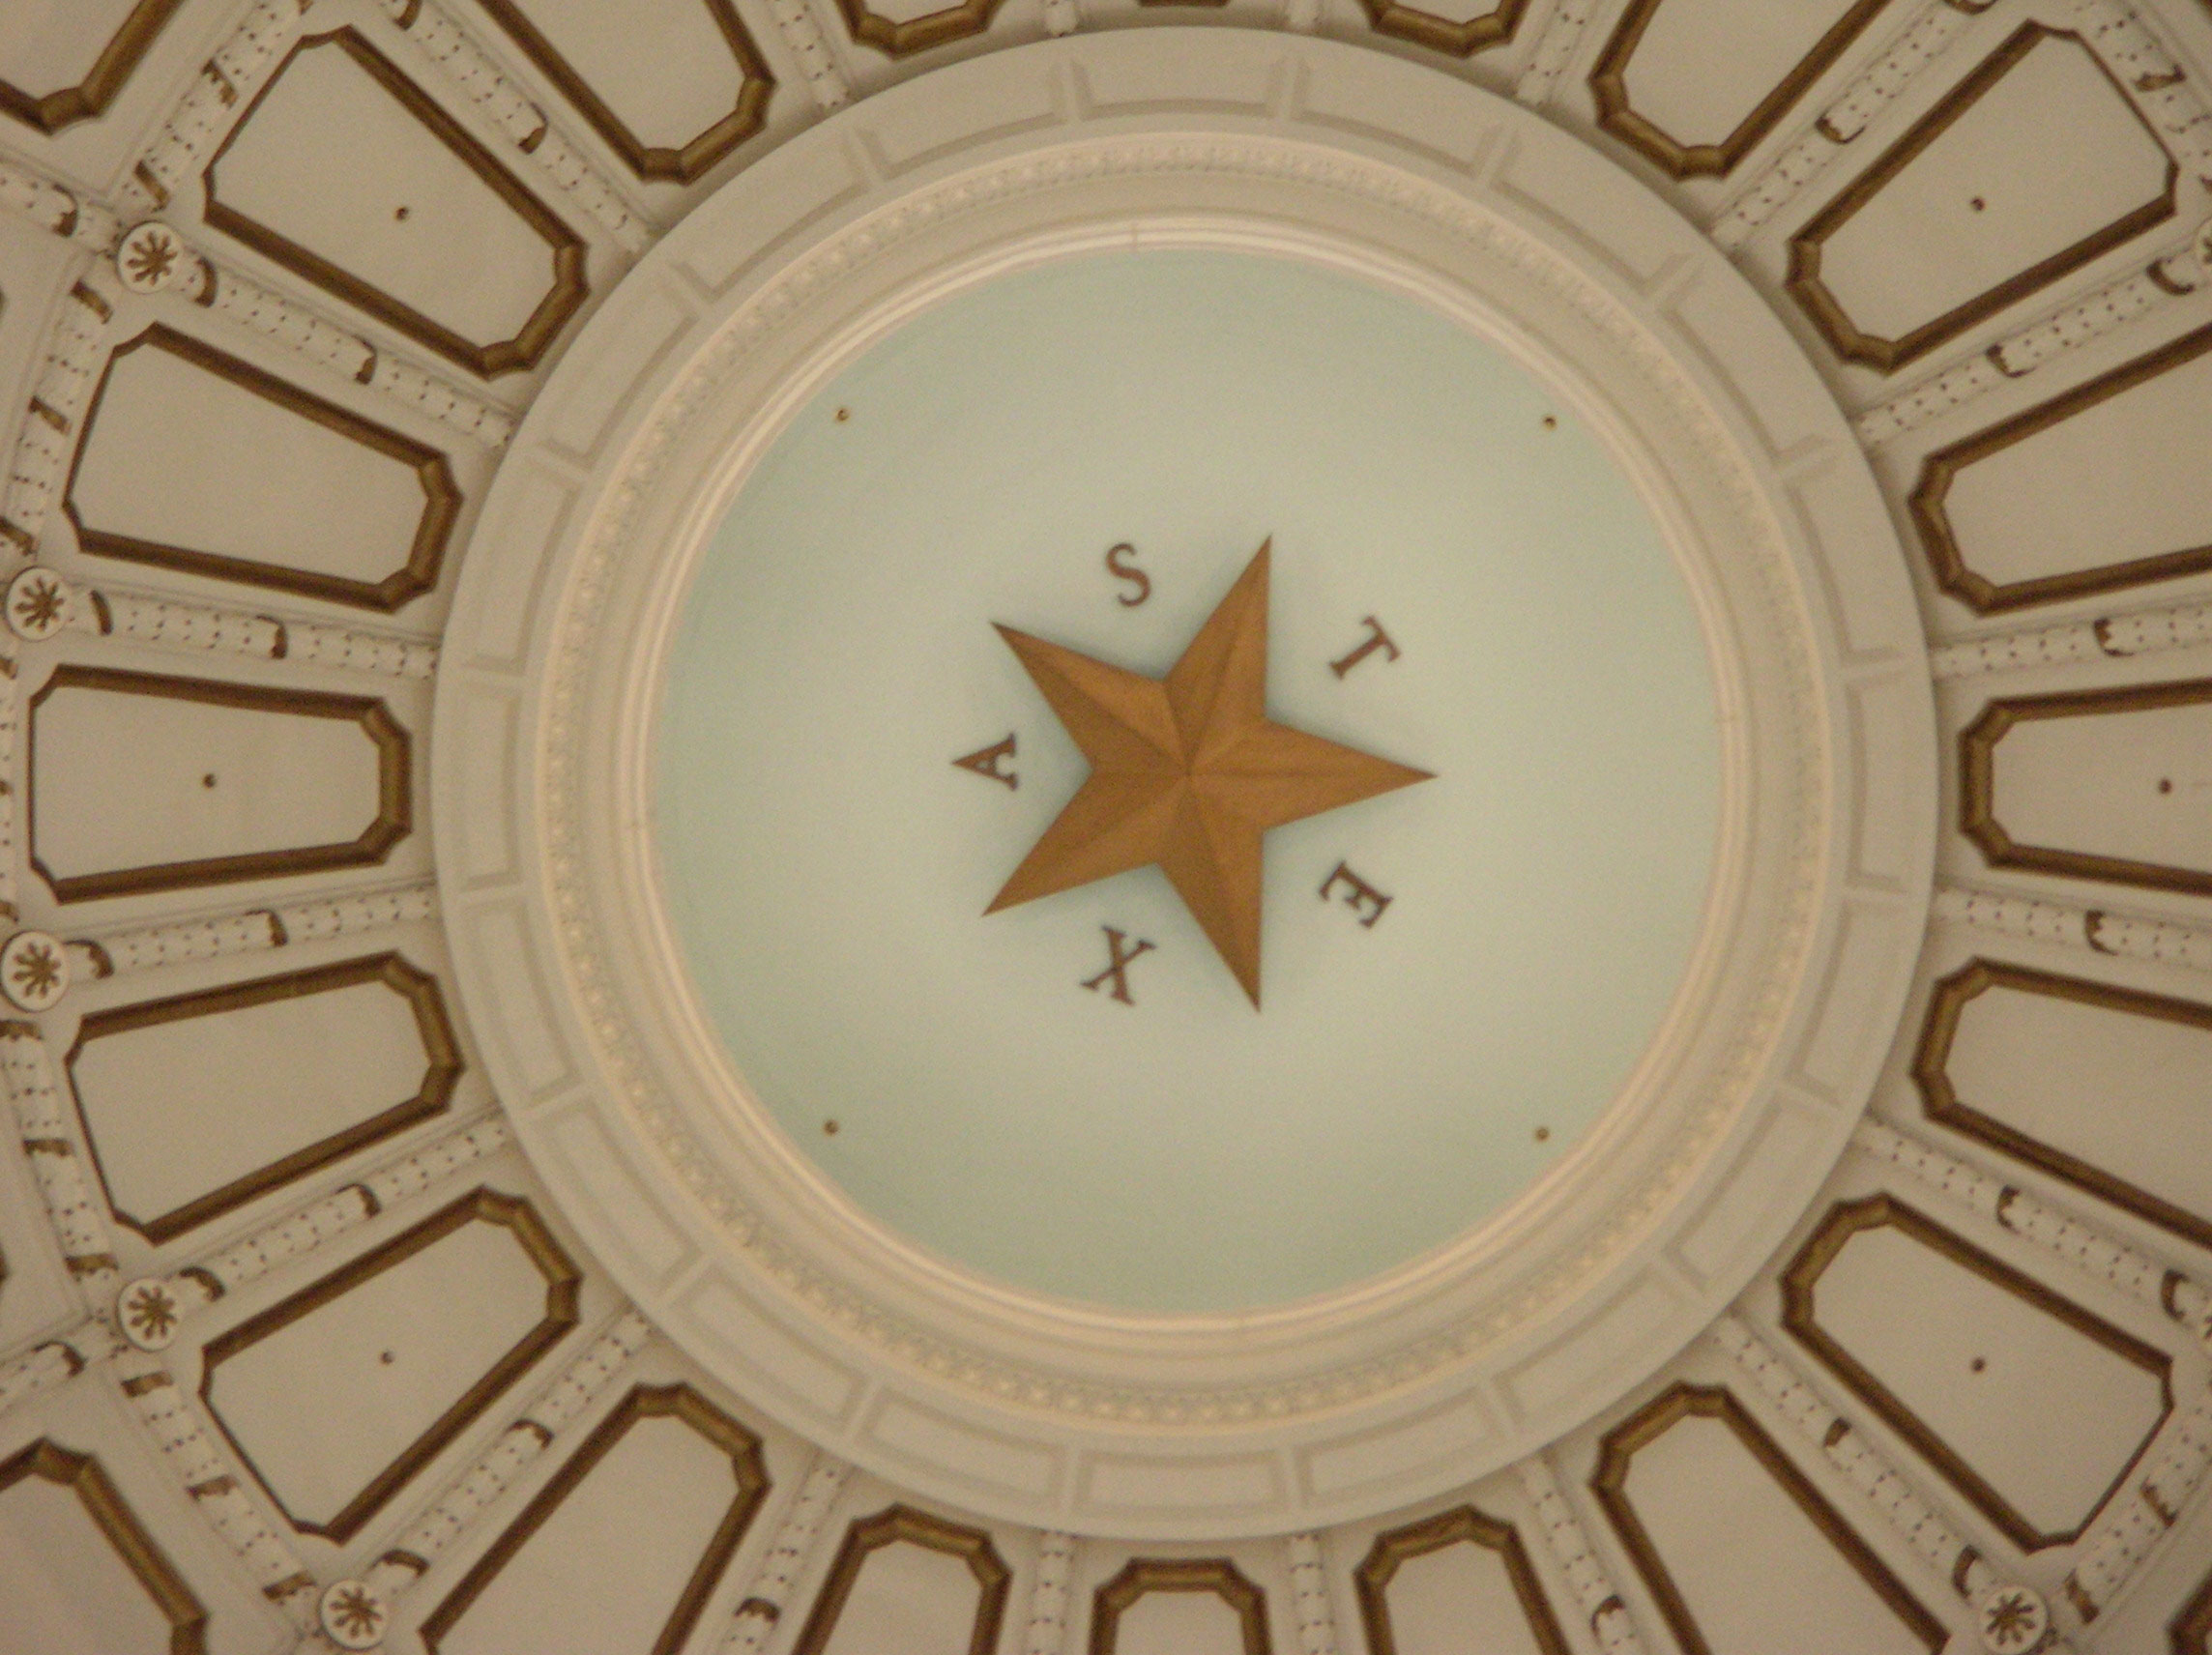 Capitol Dome 